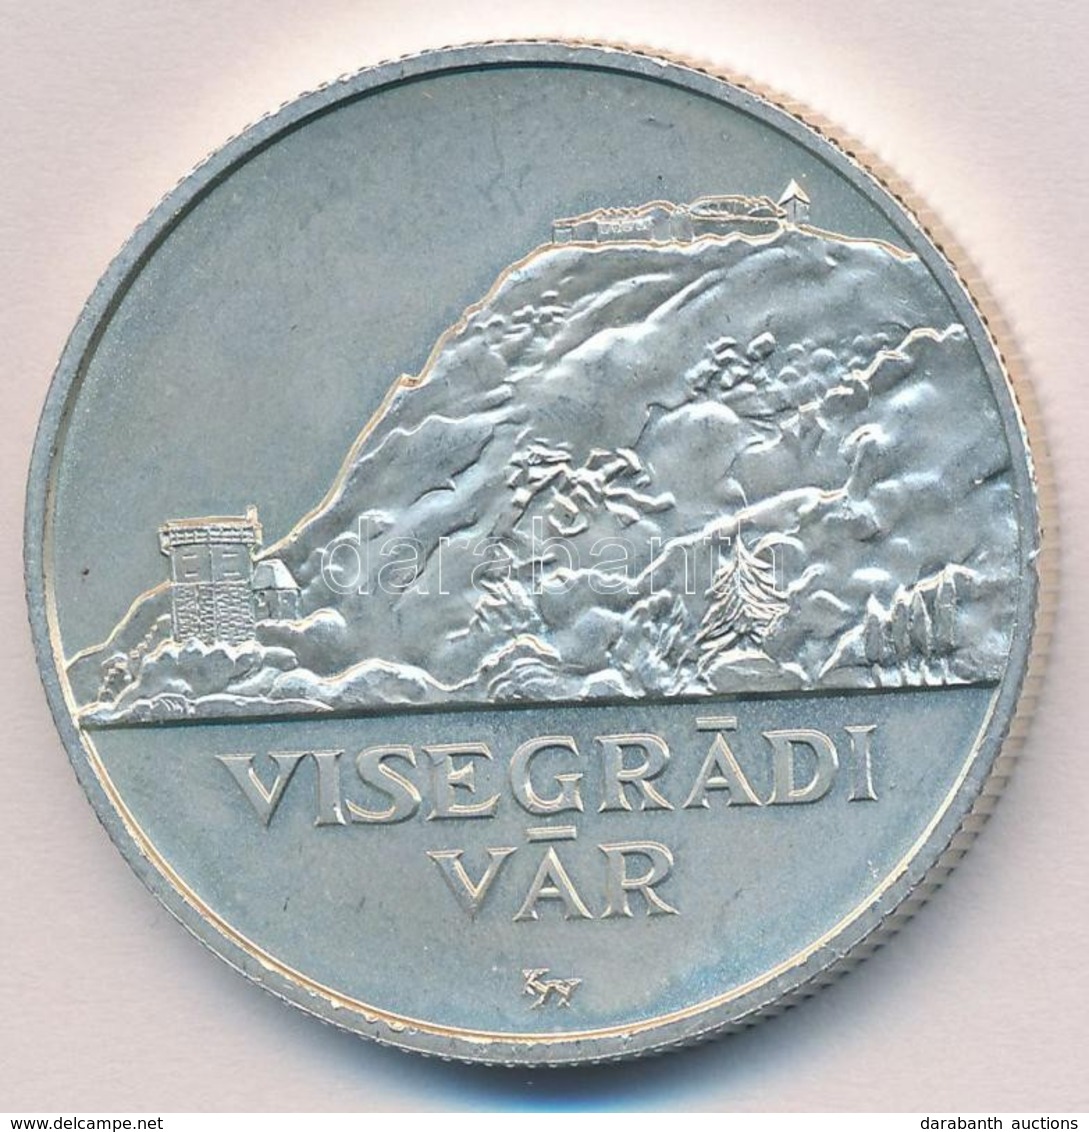 2004. 5000Ft Ag 'Visegrádi Vár' T:1,1- Kis Ph.
Adamo EM192 - Unclassified